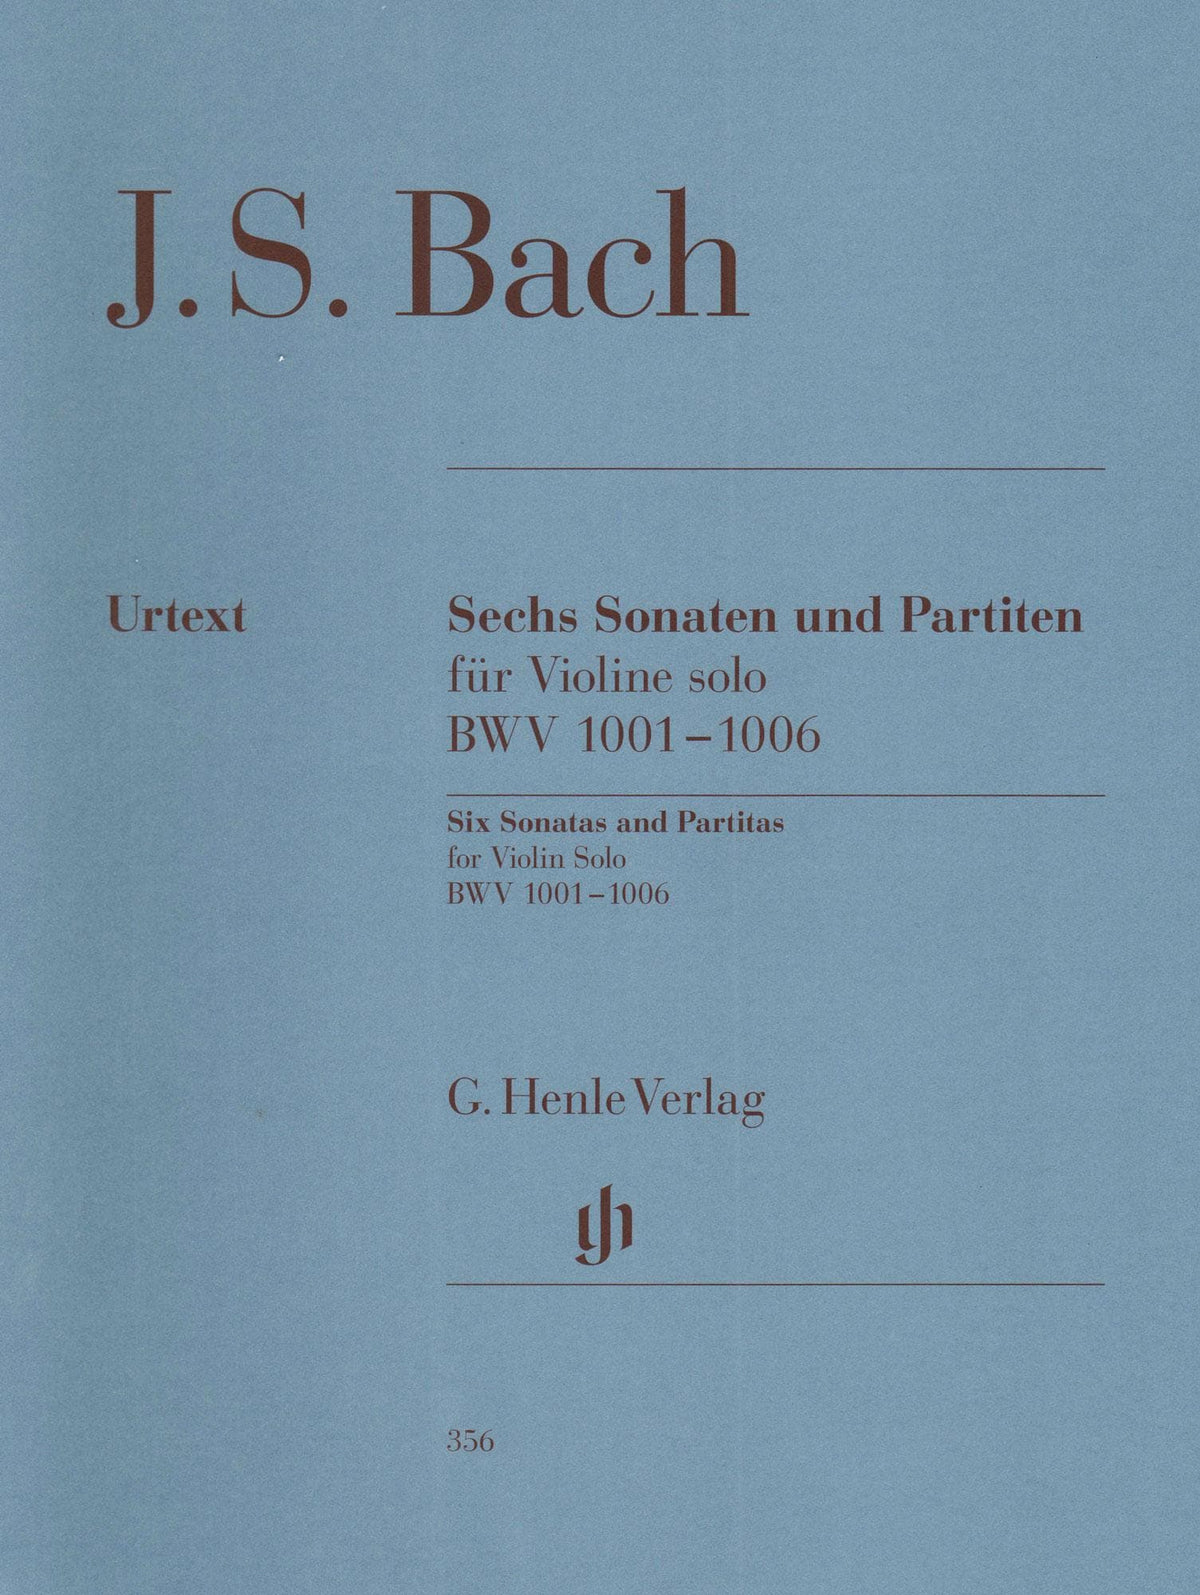 Bach, JS - 6 Sonatas and Partitas, BWV 1001-1006 - Solo Violin - edited by Klaus Rönnau and Wolfgang Schneiderhan - G Henle Verlag URTEXT